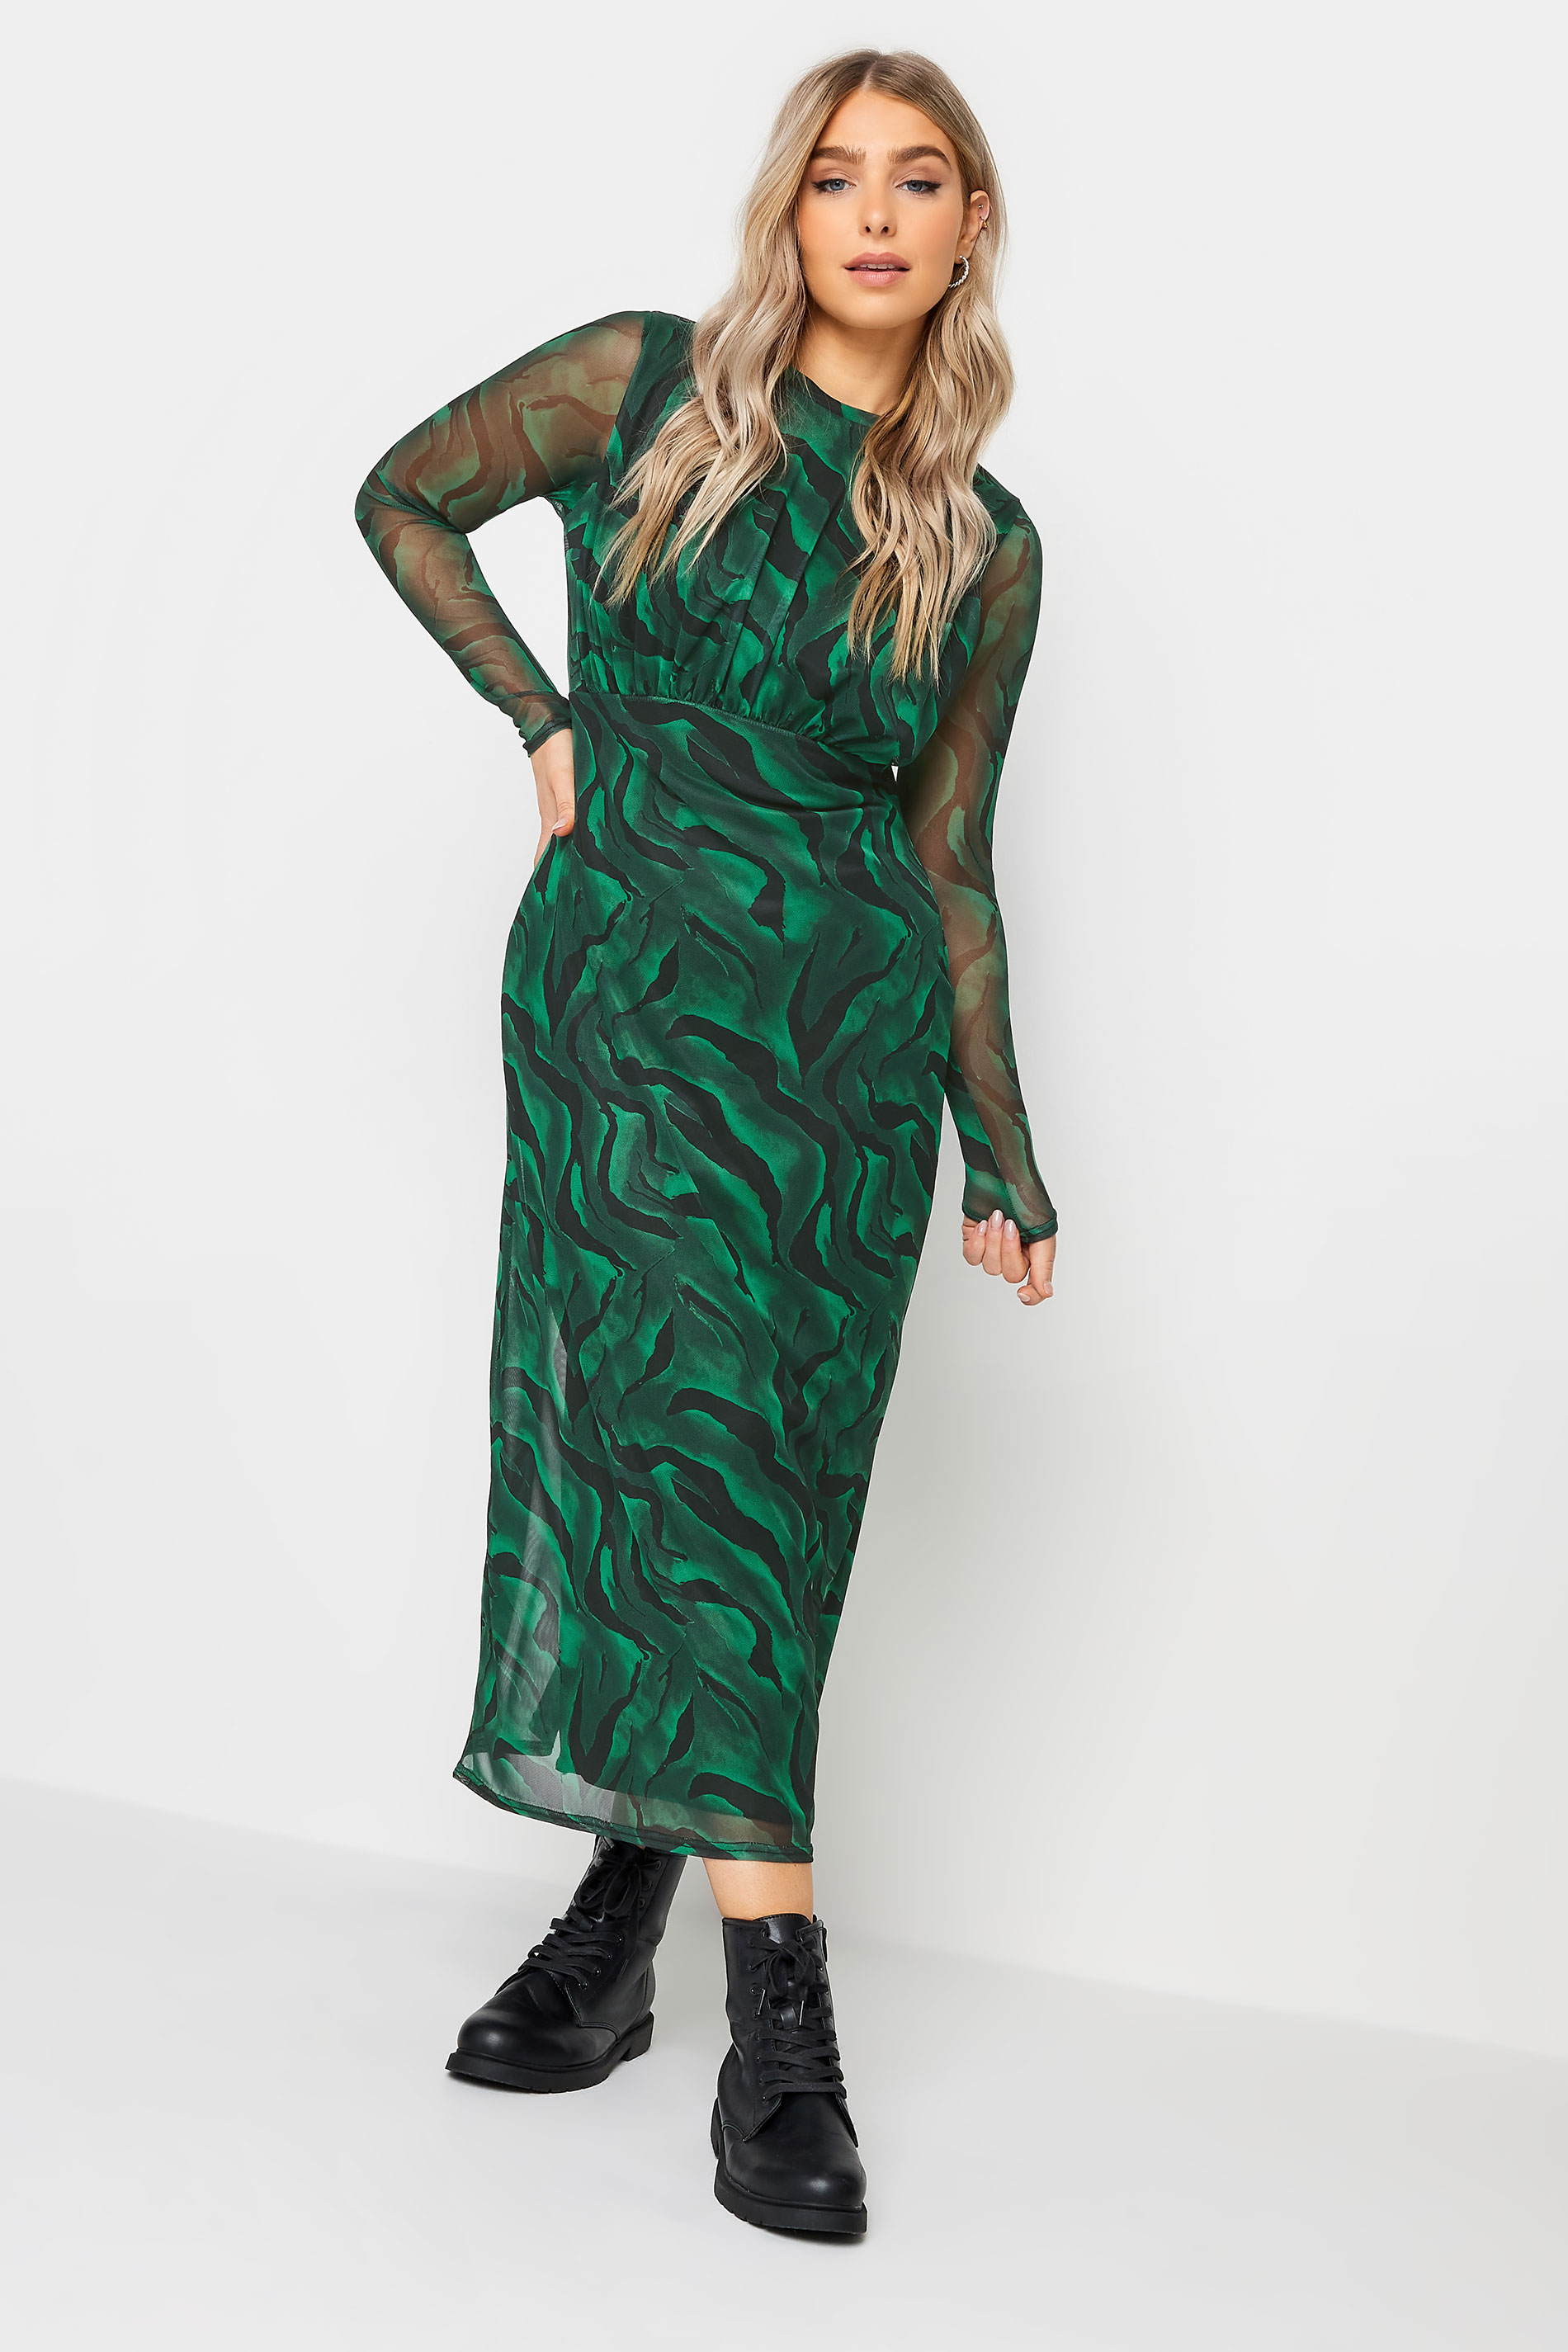 M&Co Green Abstract Print Mesh Maxi Dress | M&Co 2